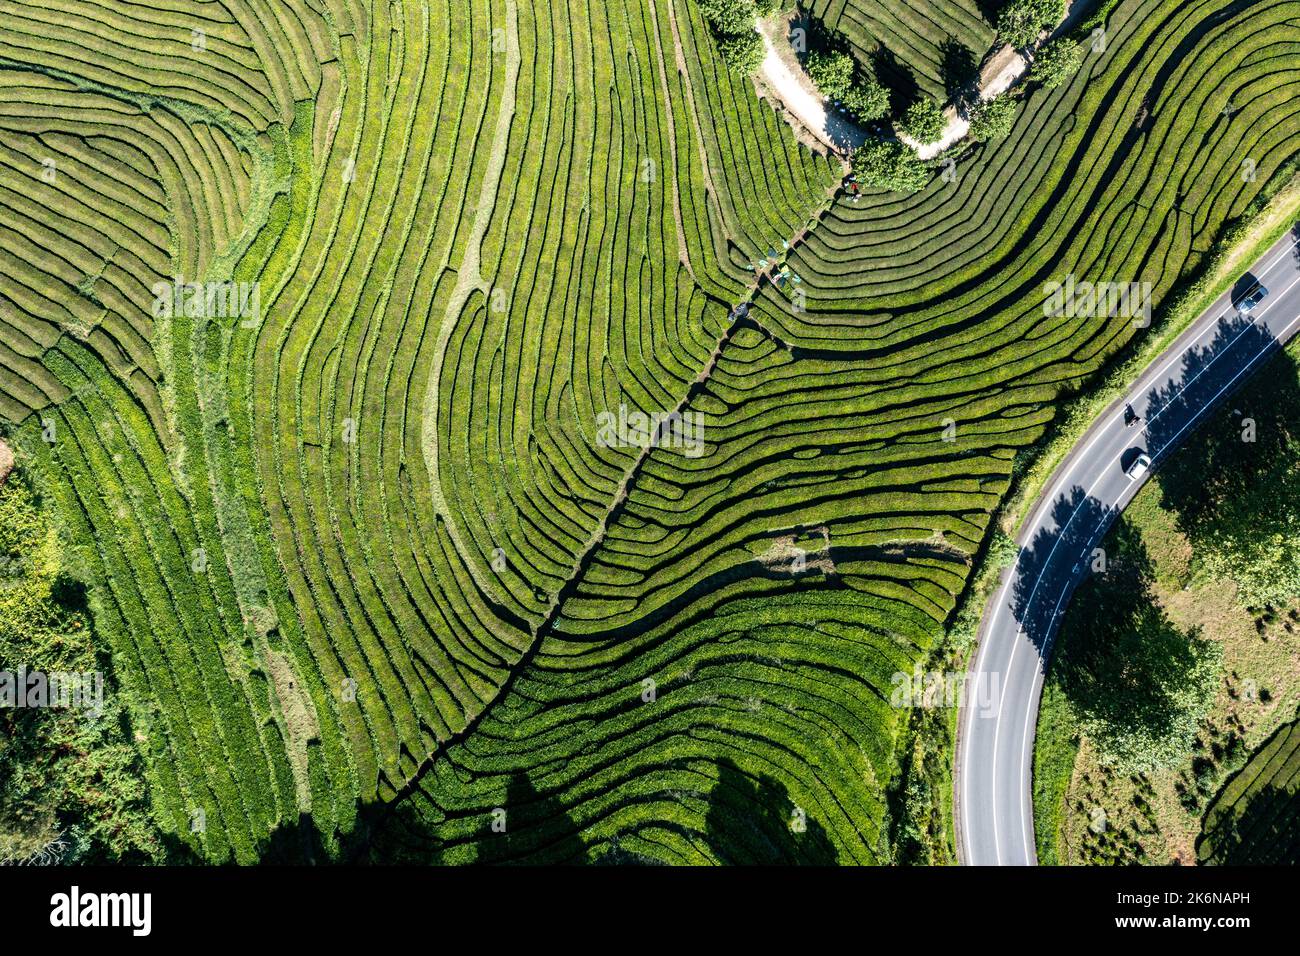 Lush green tea fields on San Miguel Island, Azores Stock Photo